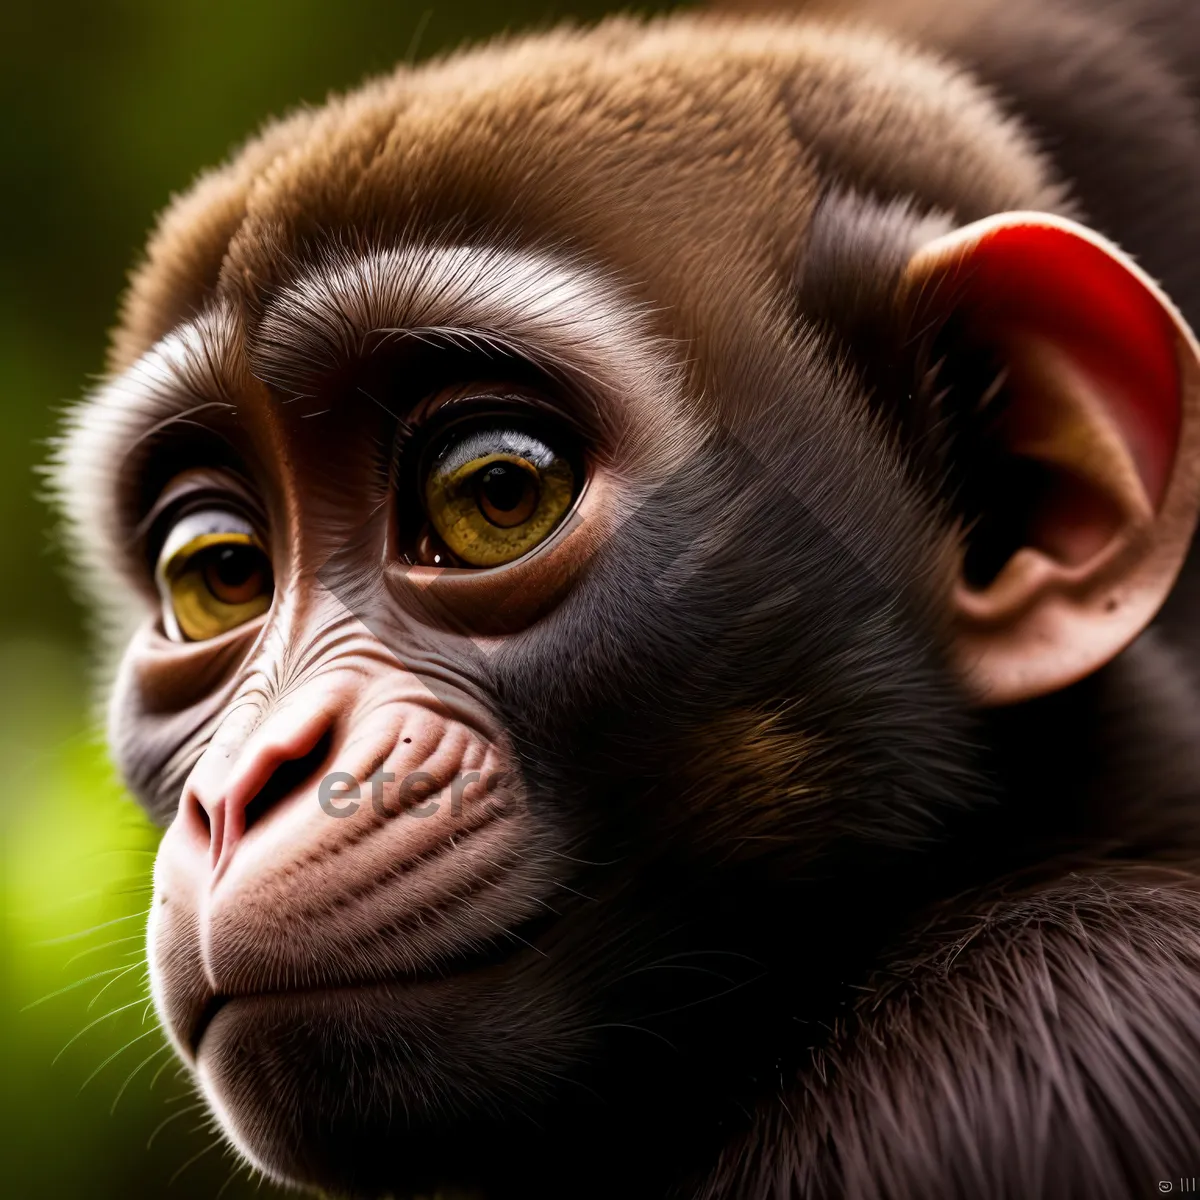 Picture of Exquisite Primate Charm: Chimpanzee in the Wild.